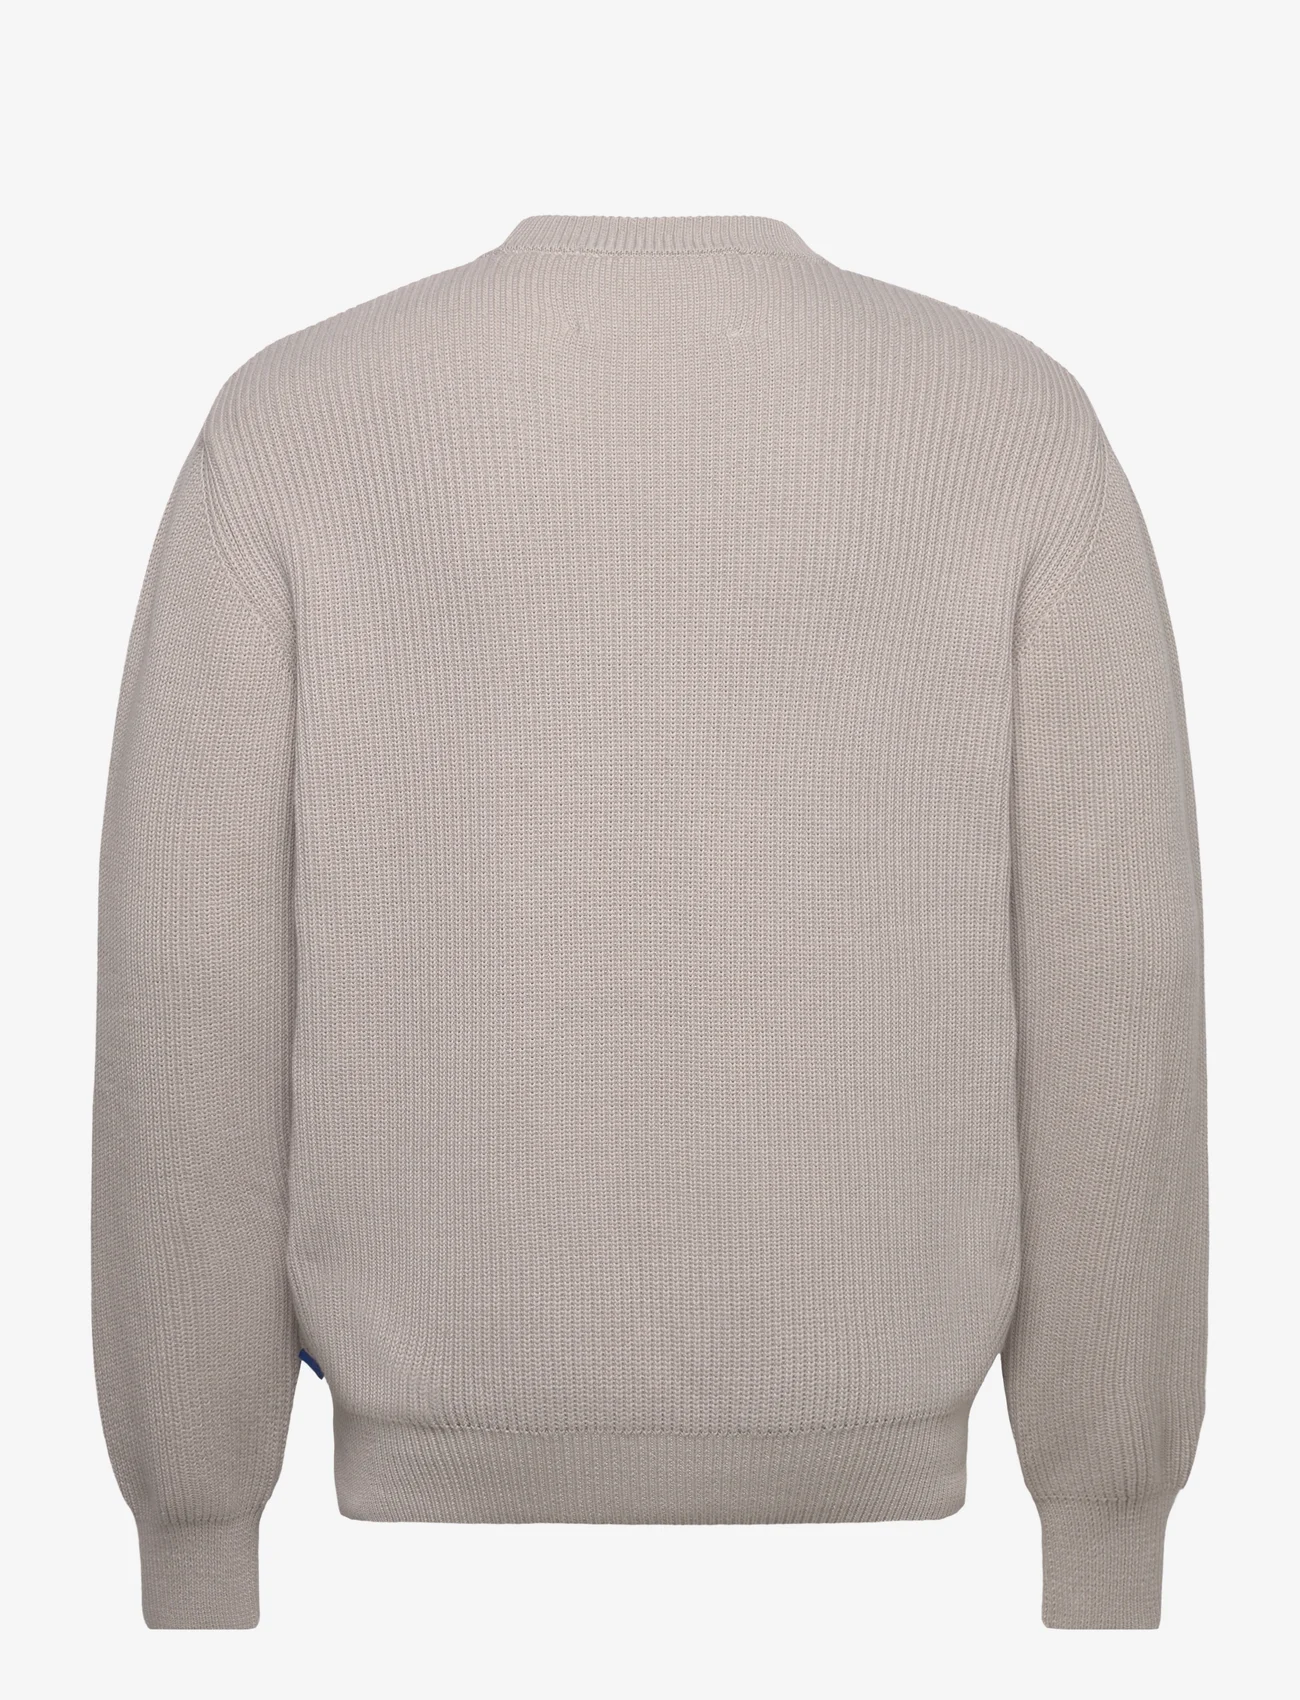 Garment Project - Round Neck Knit - Light Grey - adījumi ar apaļu kakla izgriezumu - light grey - 1